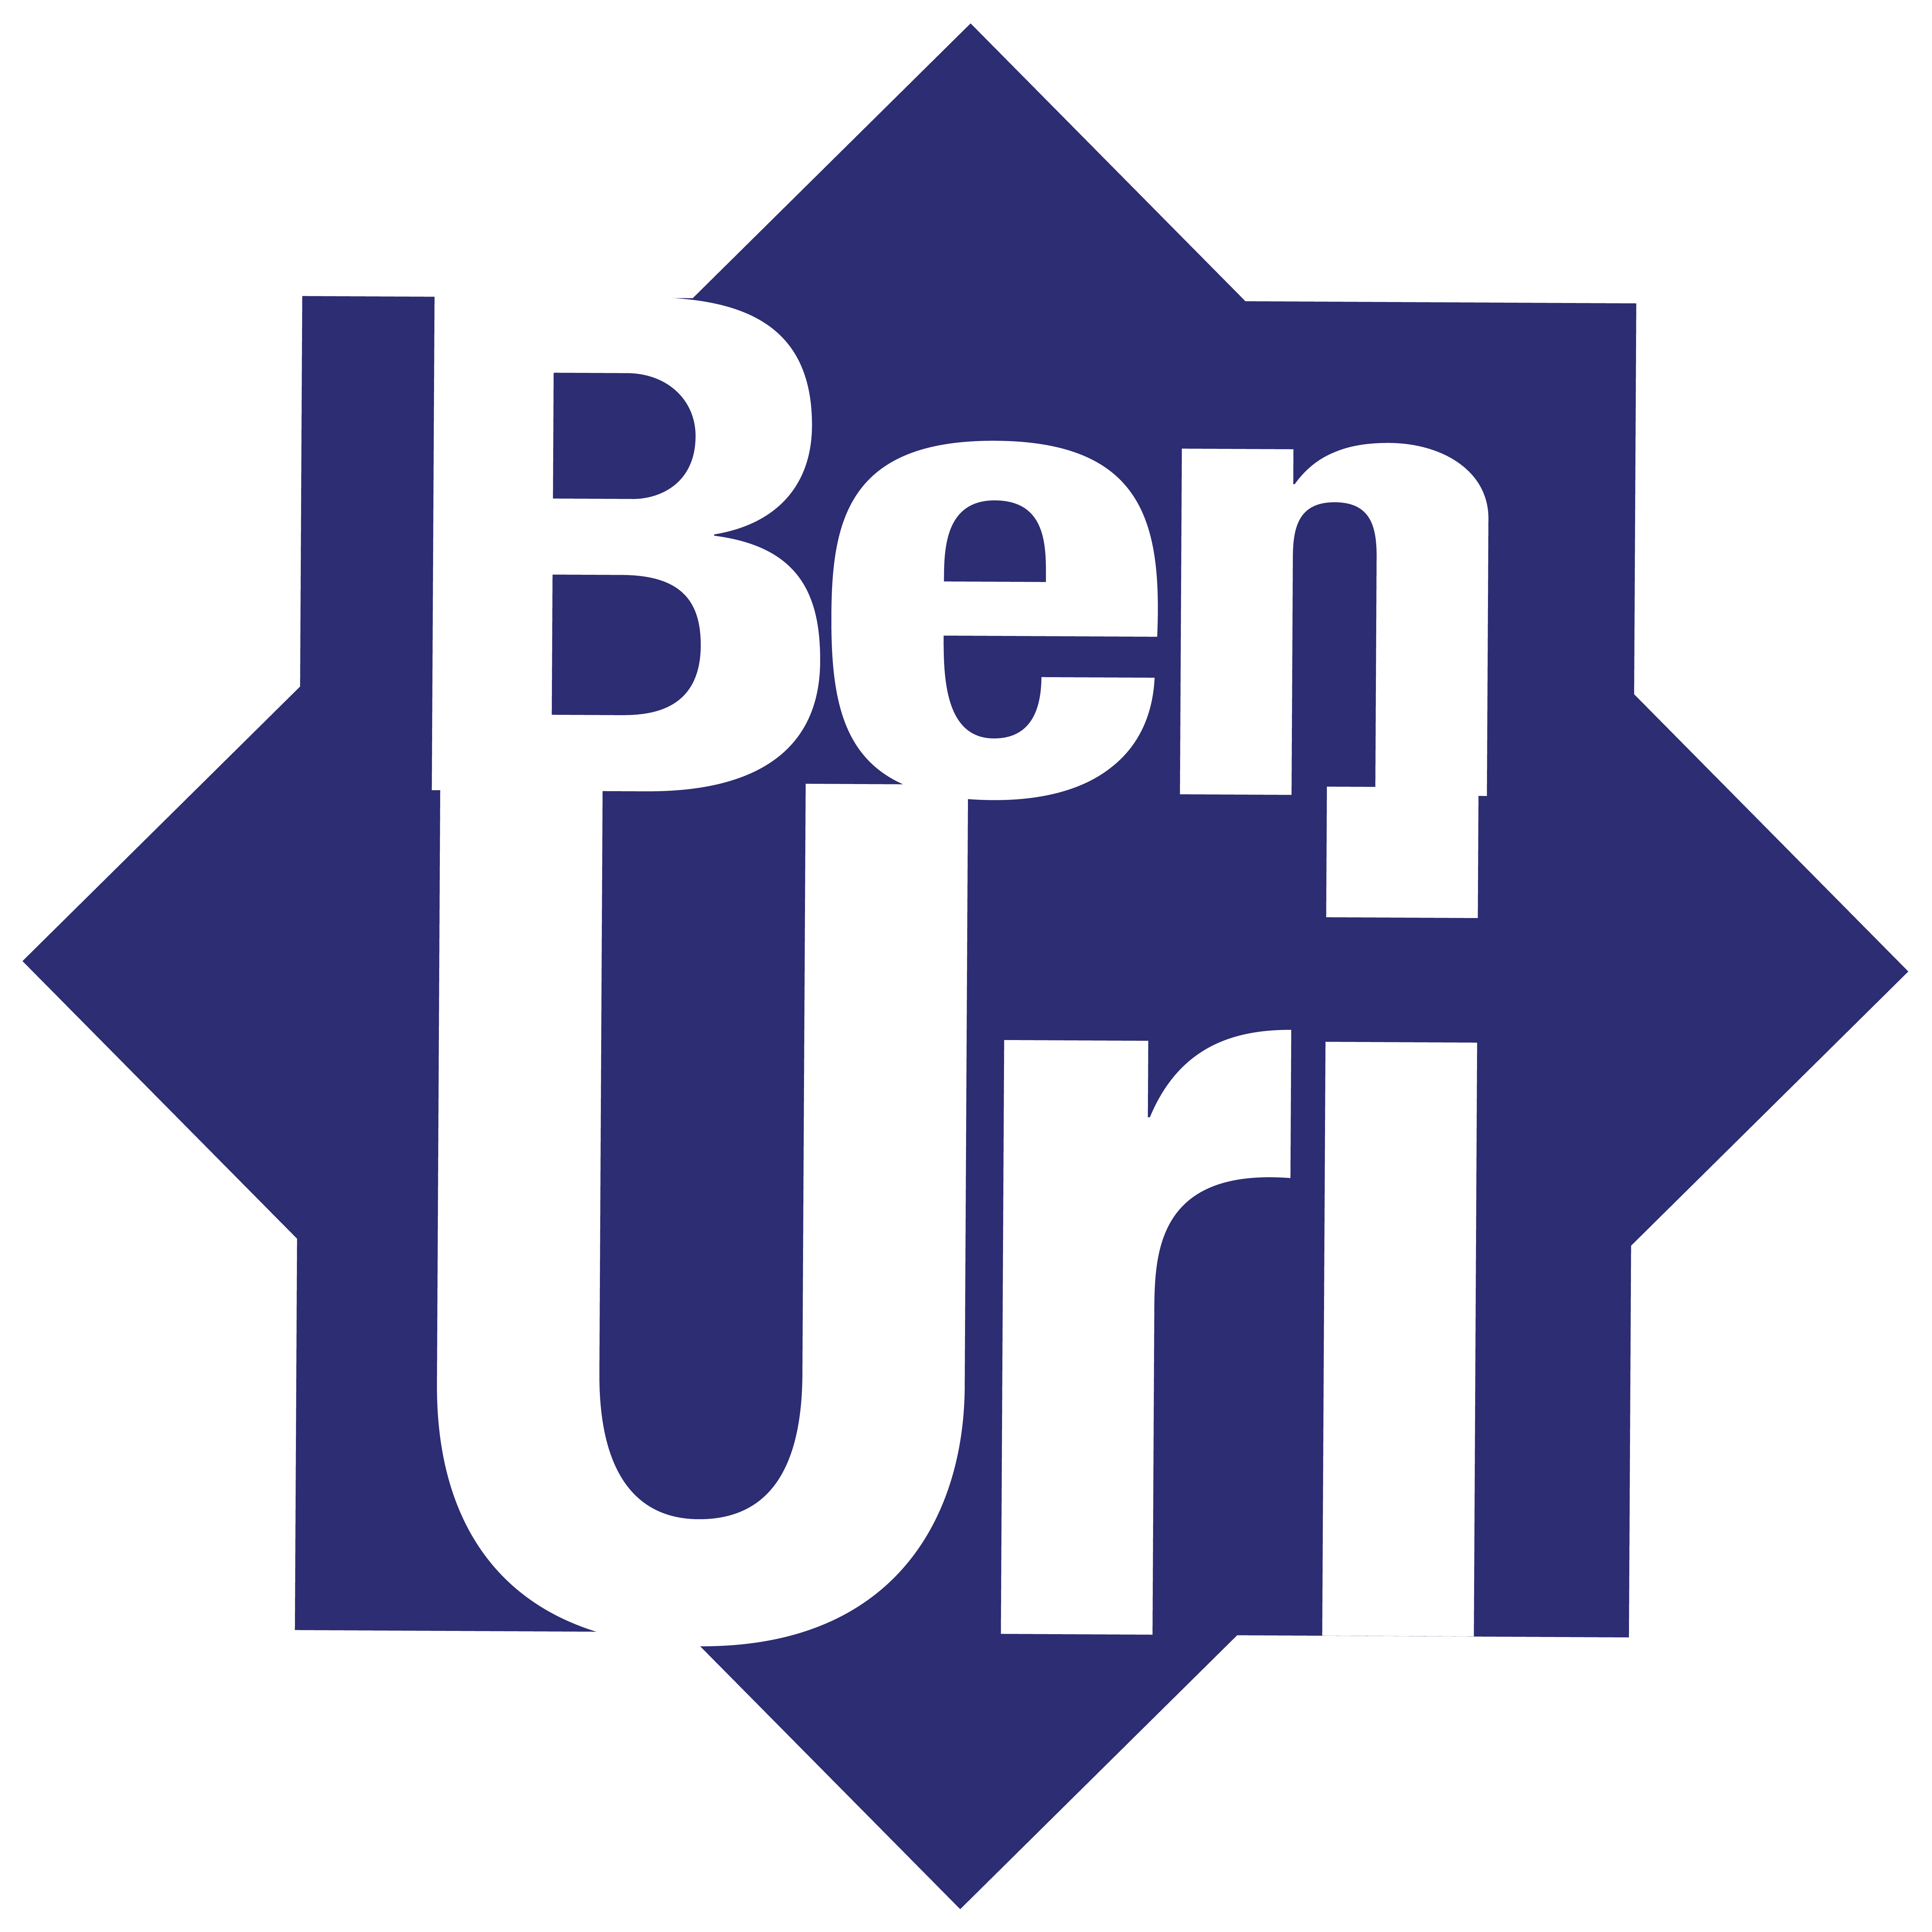 Ben Uri Логотип компании галереи и музея